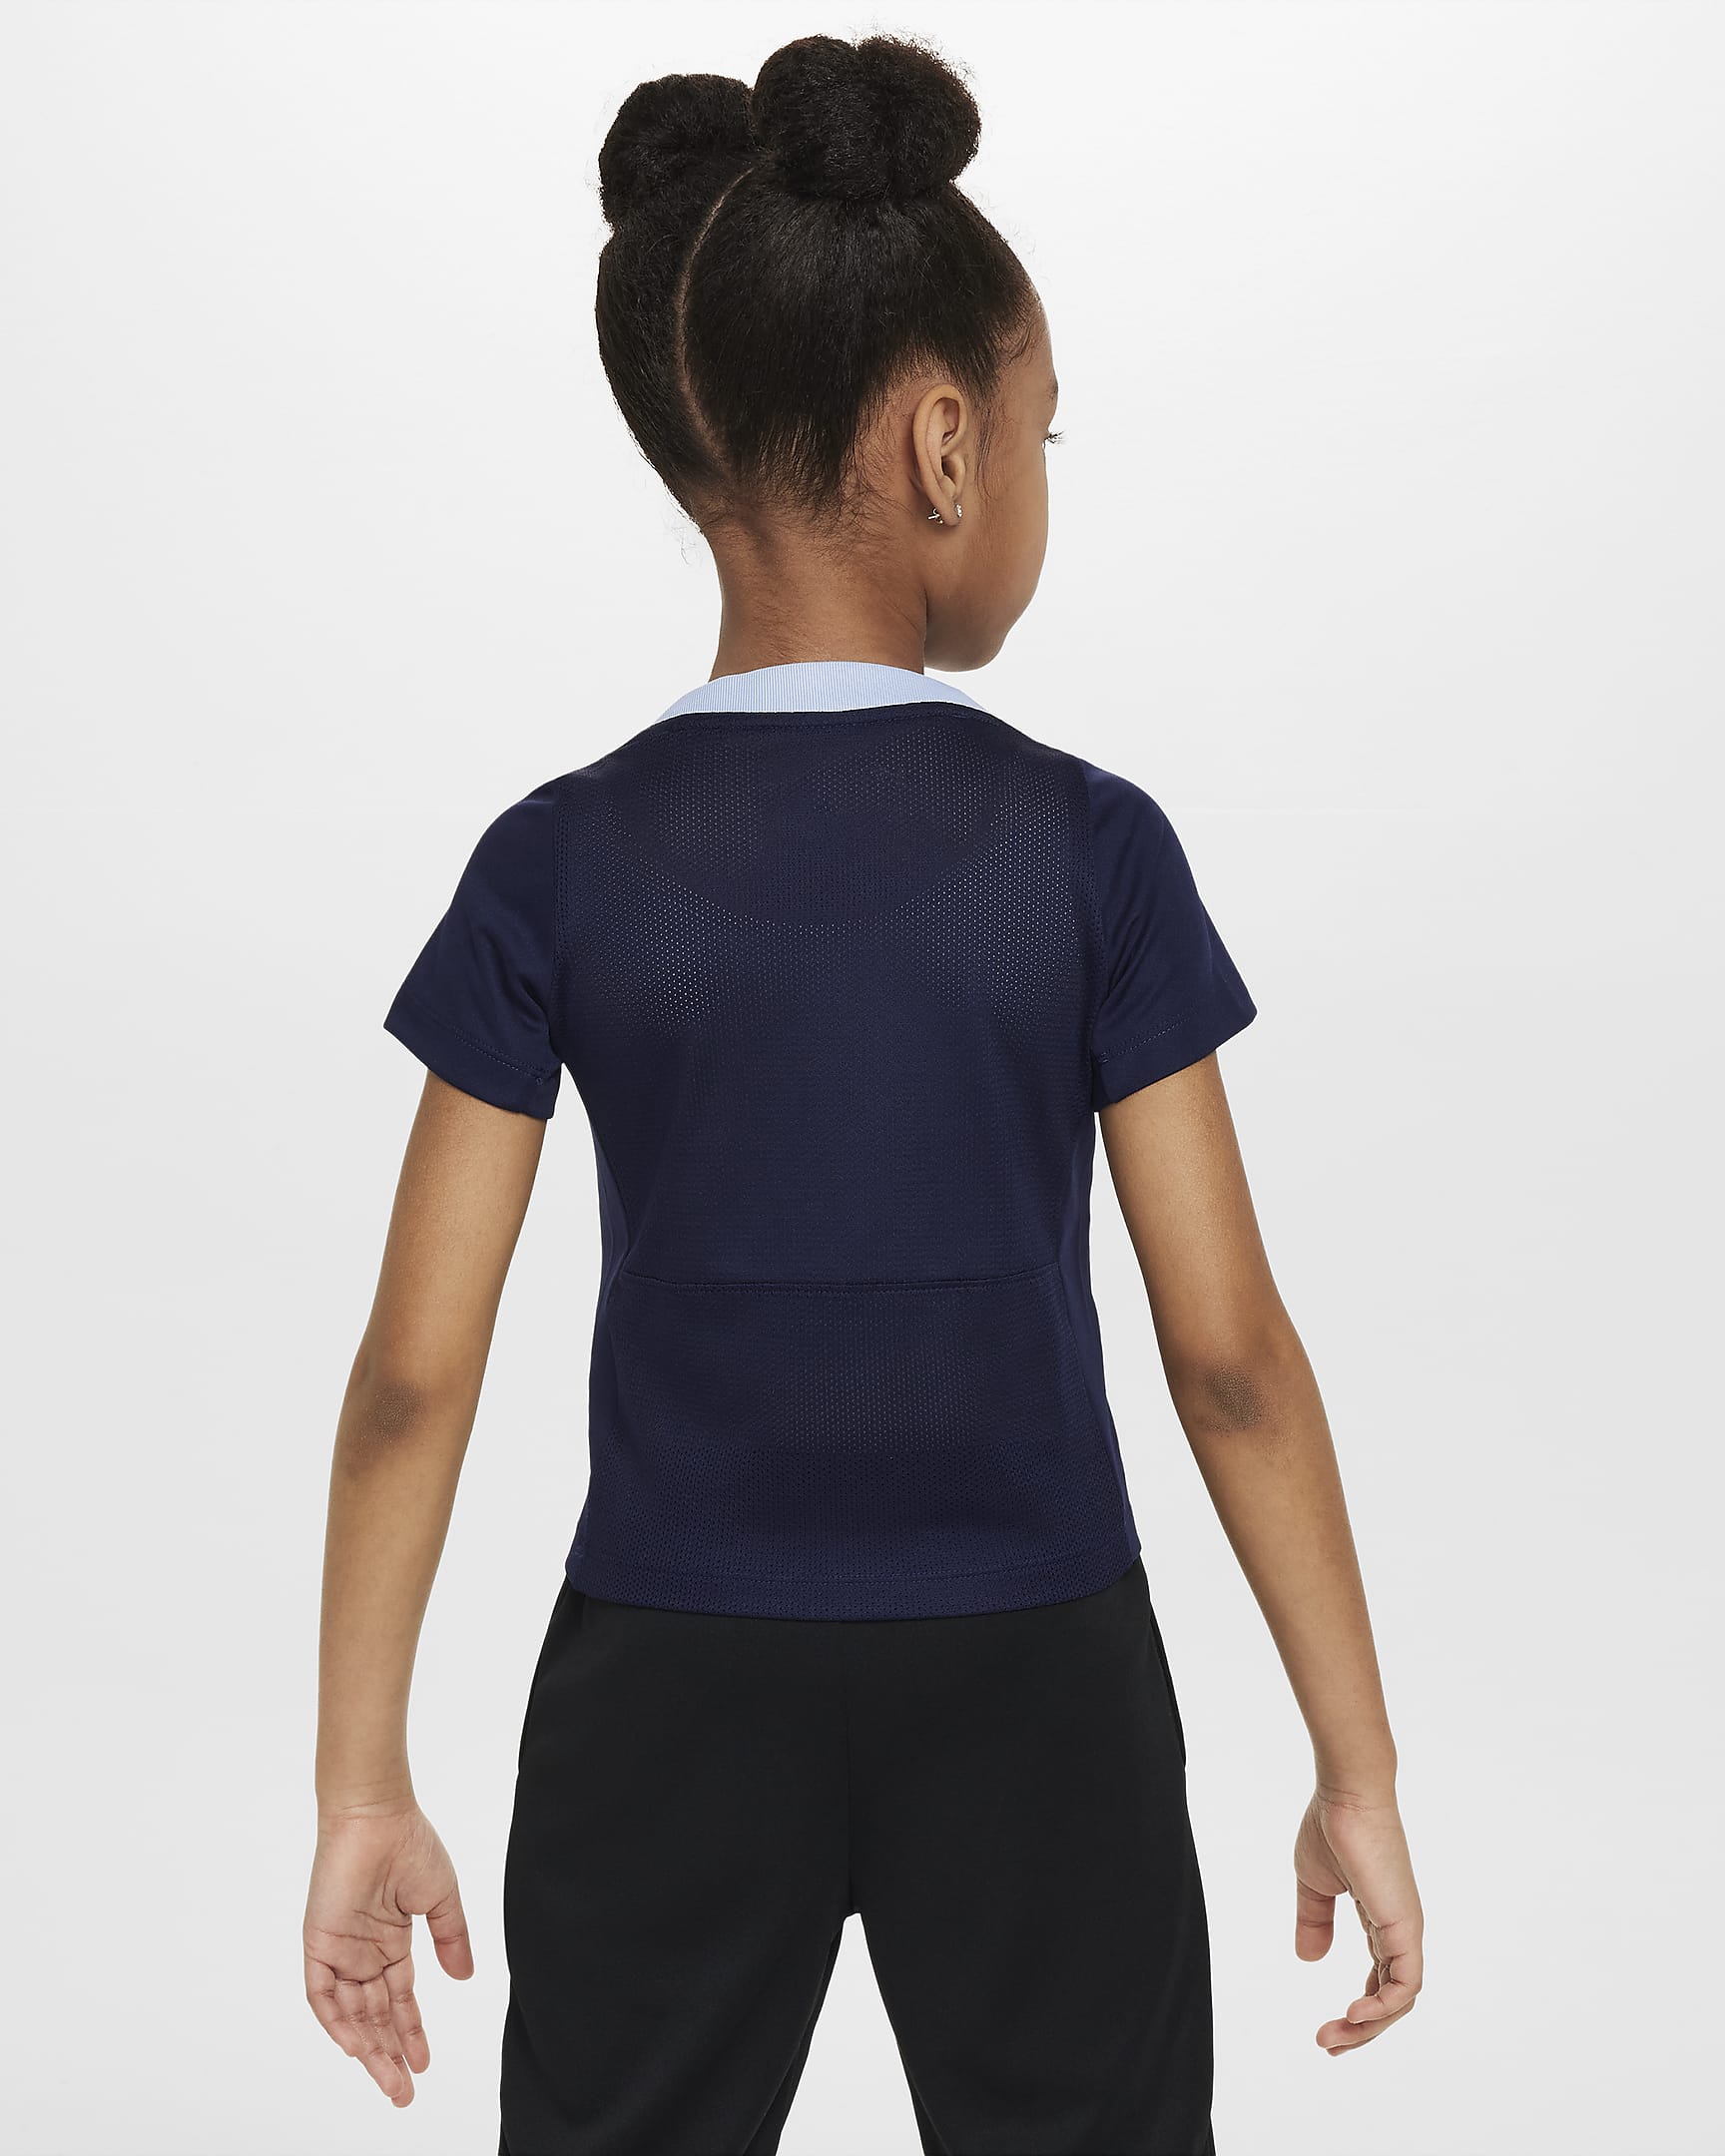 FFF Academy Pro Younger Kids' Nike Dri-FIT Football Short-Sleeve Top - Blackened Blue/Cobalt Bliss